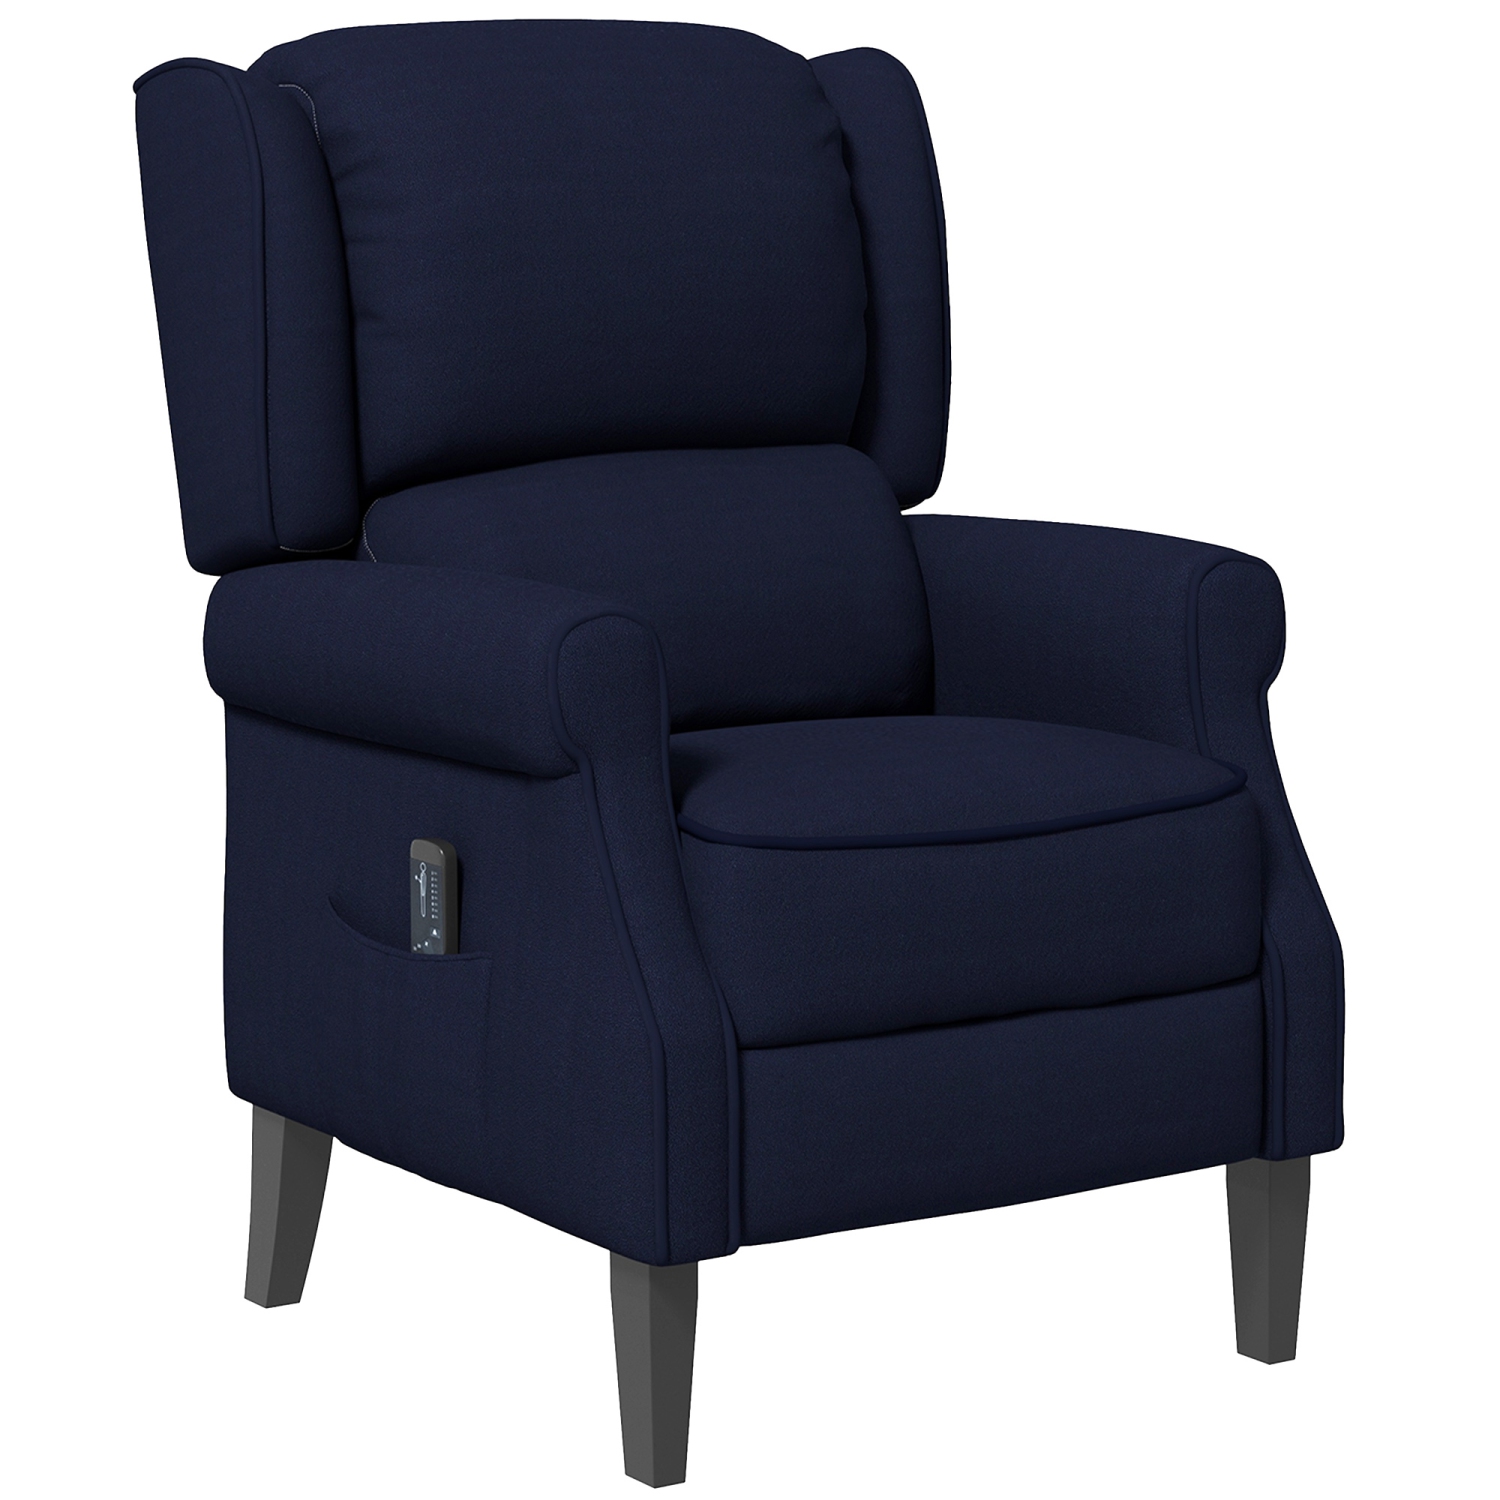 HOMCOM Massage Recliner Chair for Living Room, Push Back Recliner Sofa, Wingback Reclining Chair with Extendable Footrest, Remote Control, Side Pockets, Blue